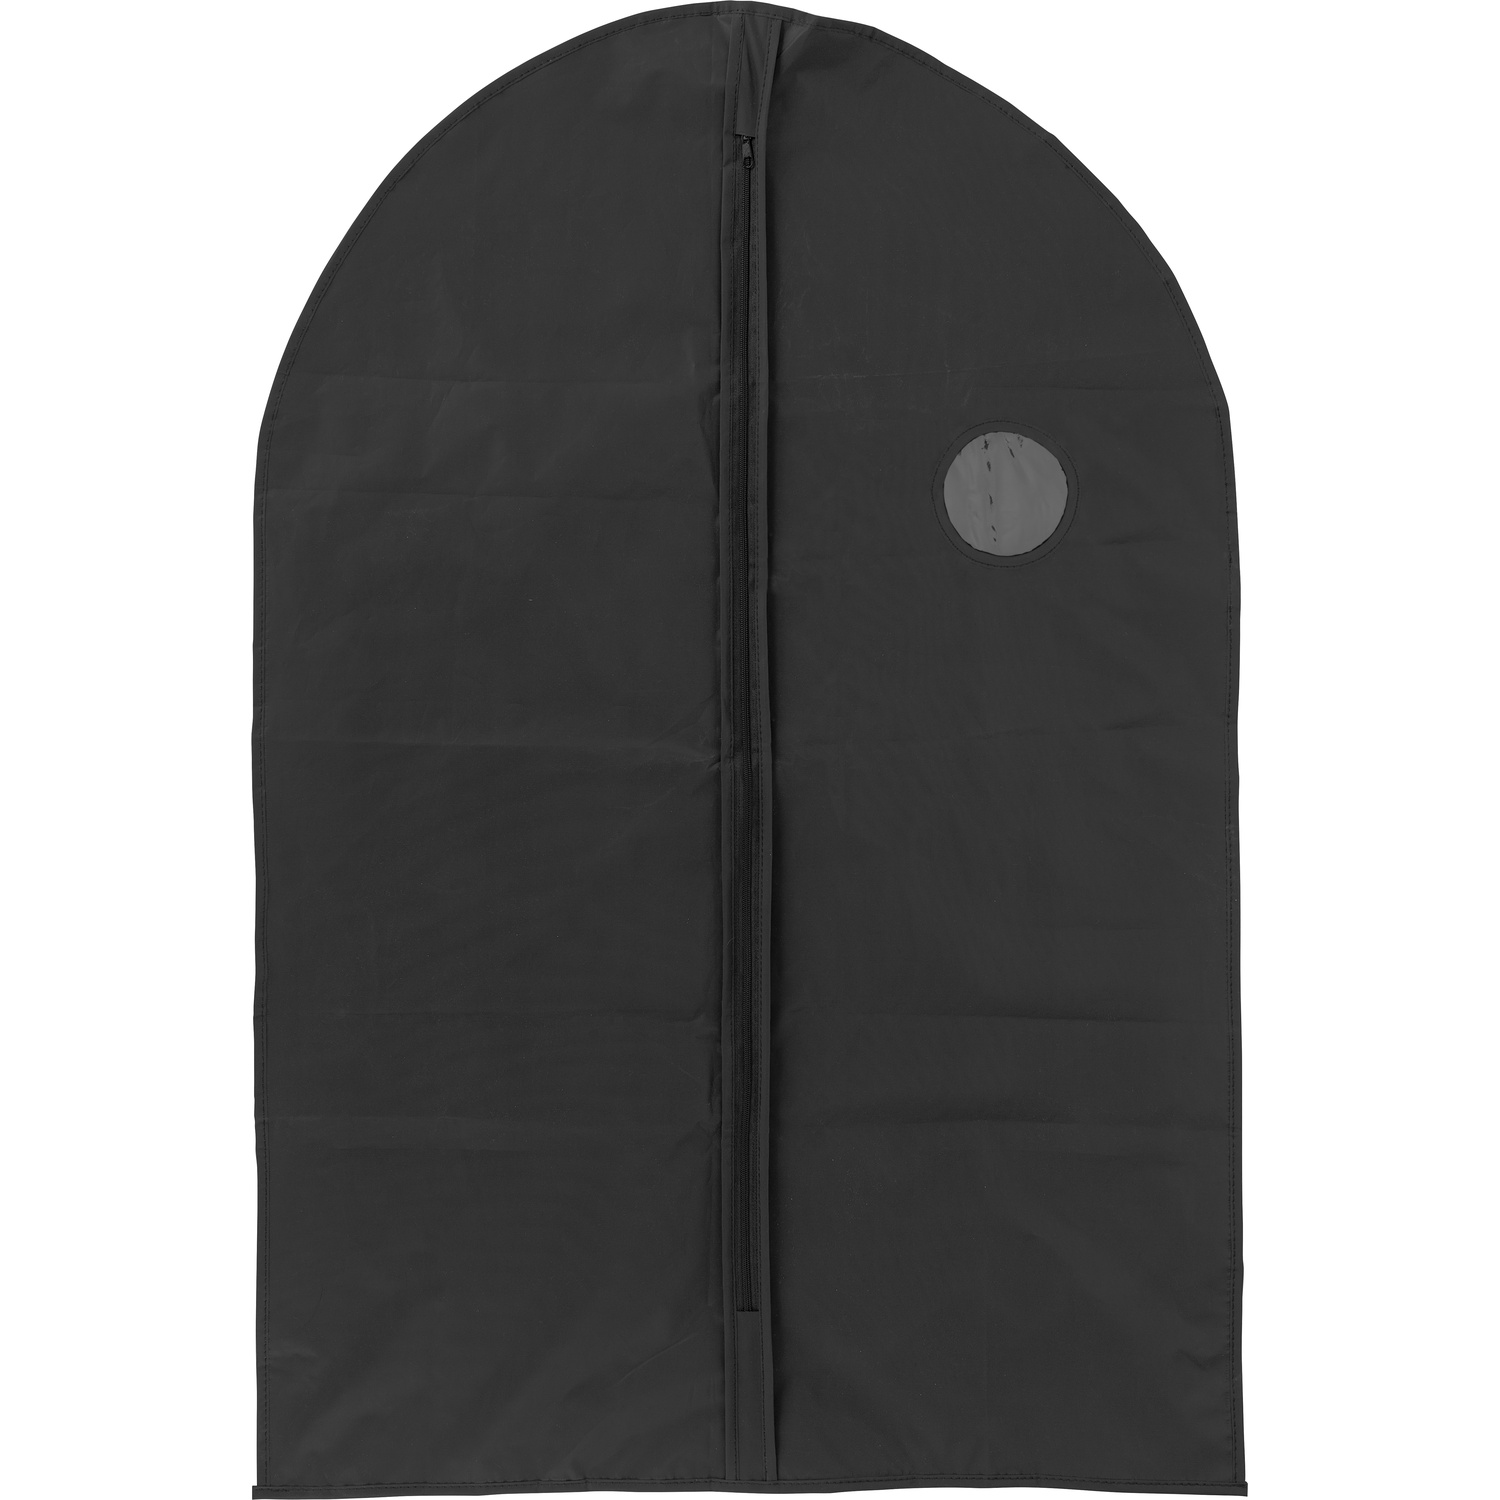 006449 001999999 2d090 frt pro01 fal - Garment bag with a zipper